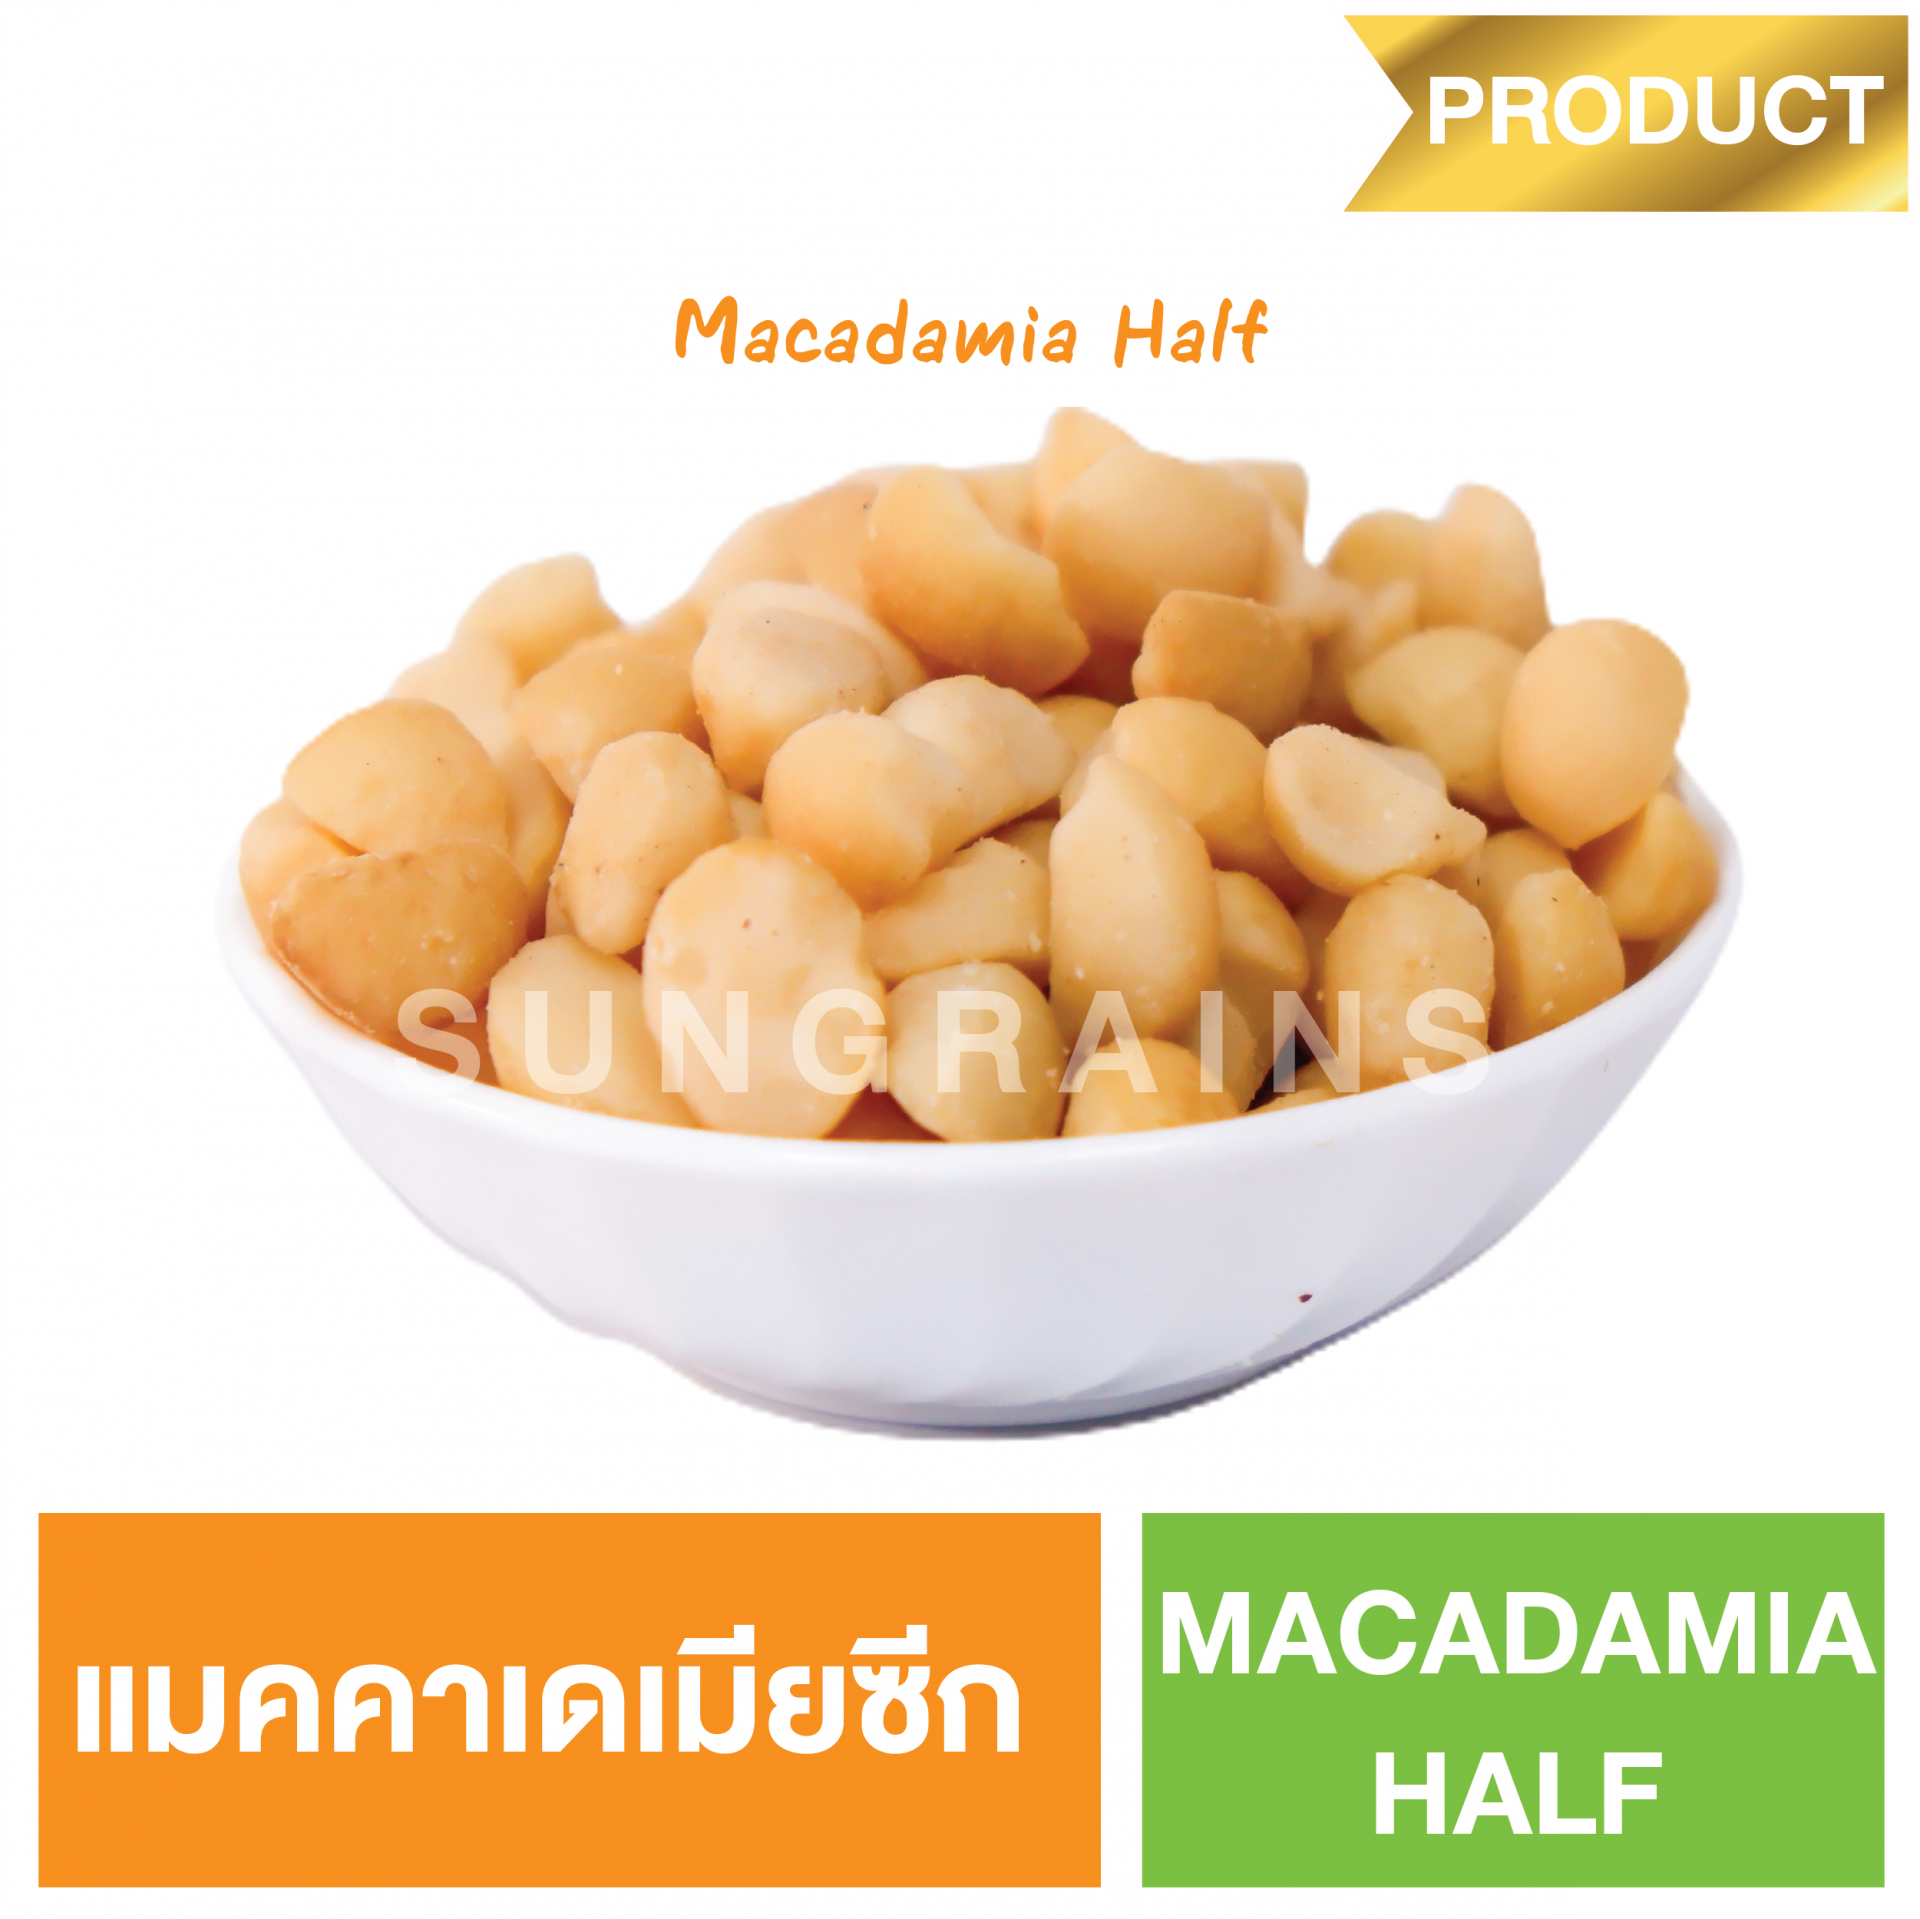 Macadamia Half